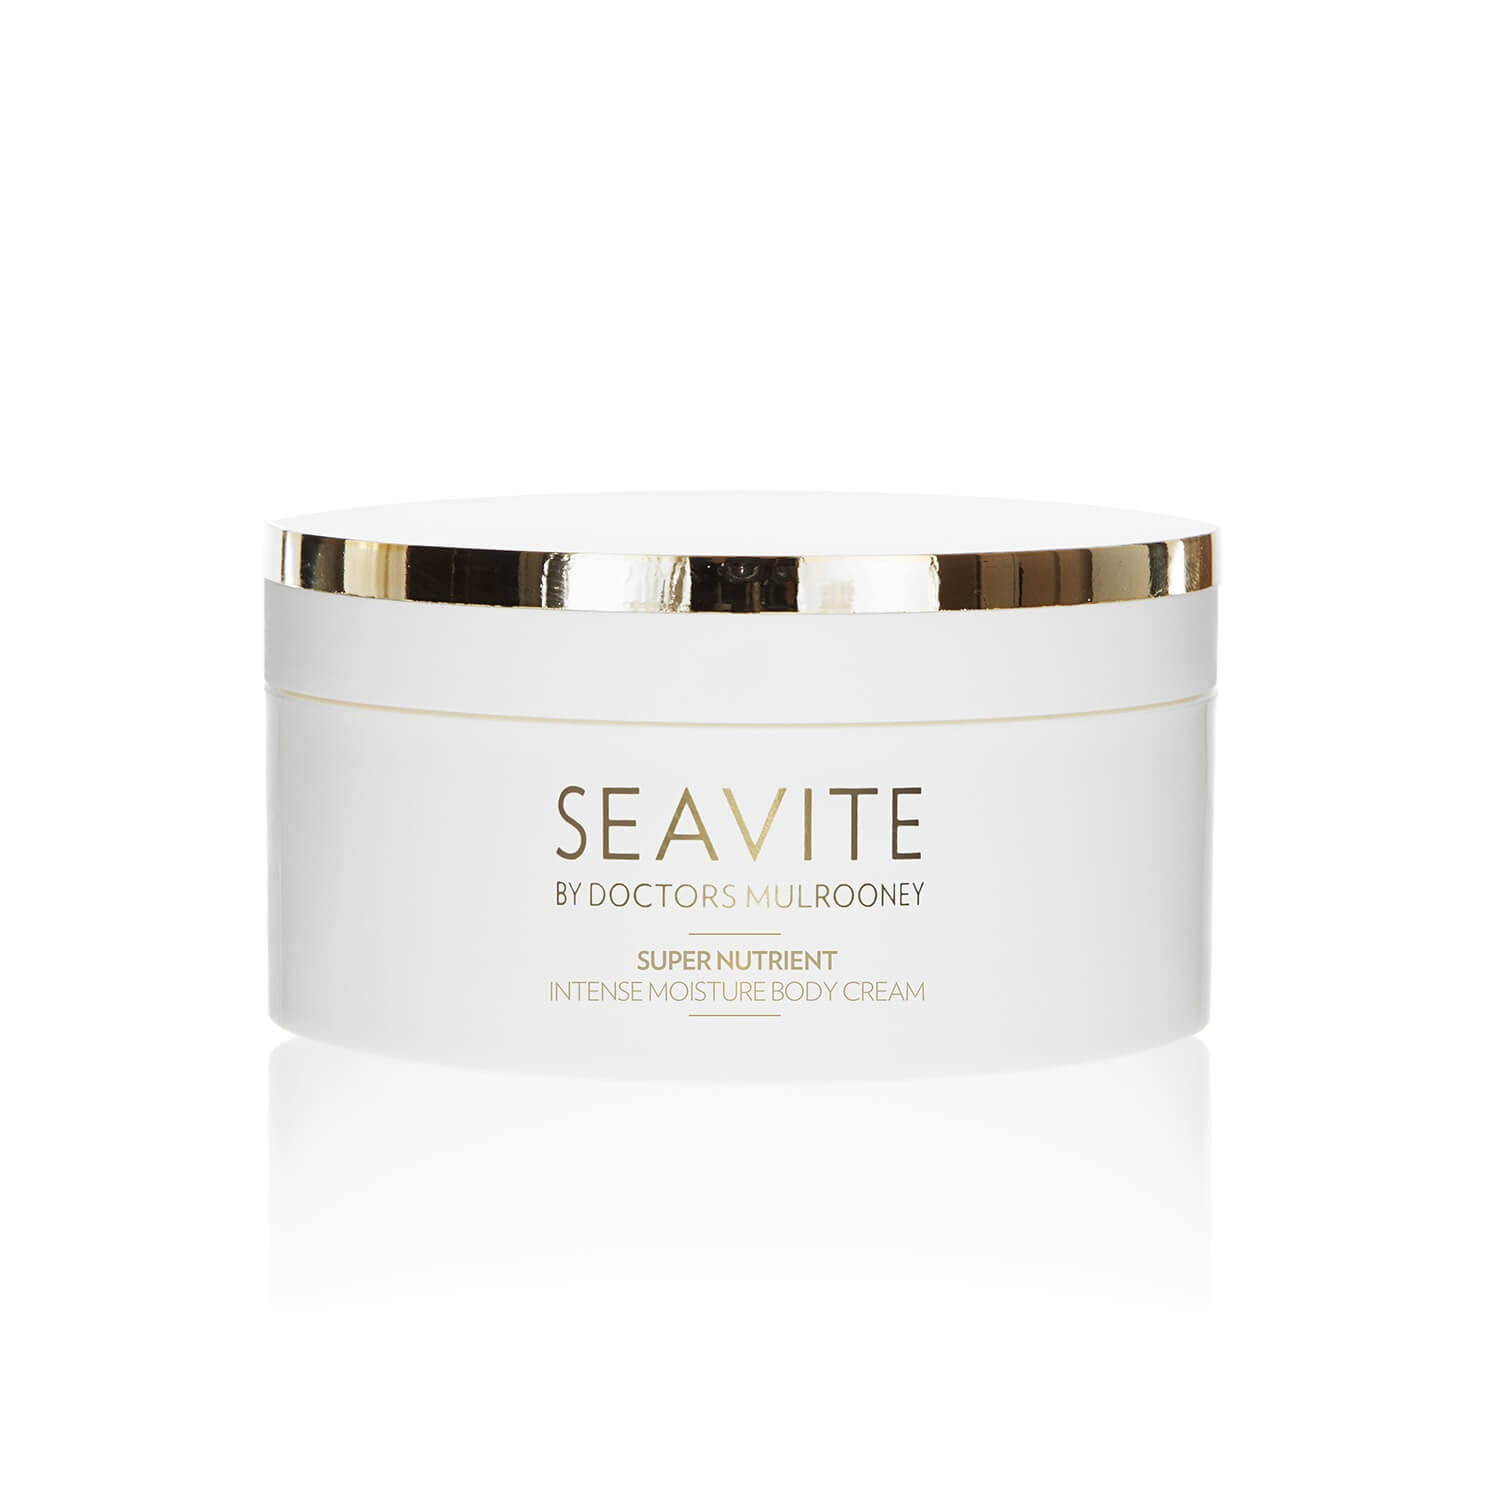 Seavite - Super Nutrient Intense Moisture Body Cream